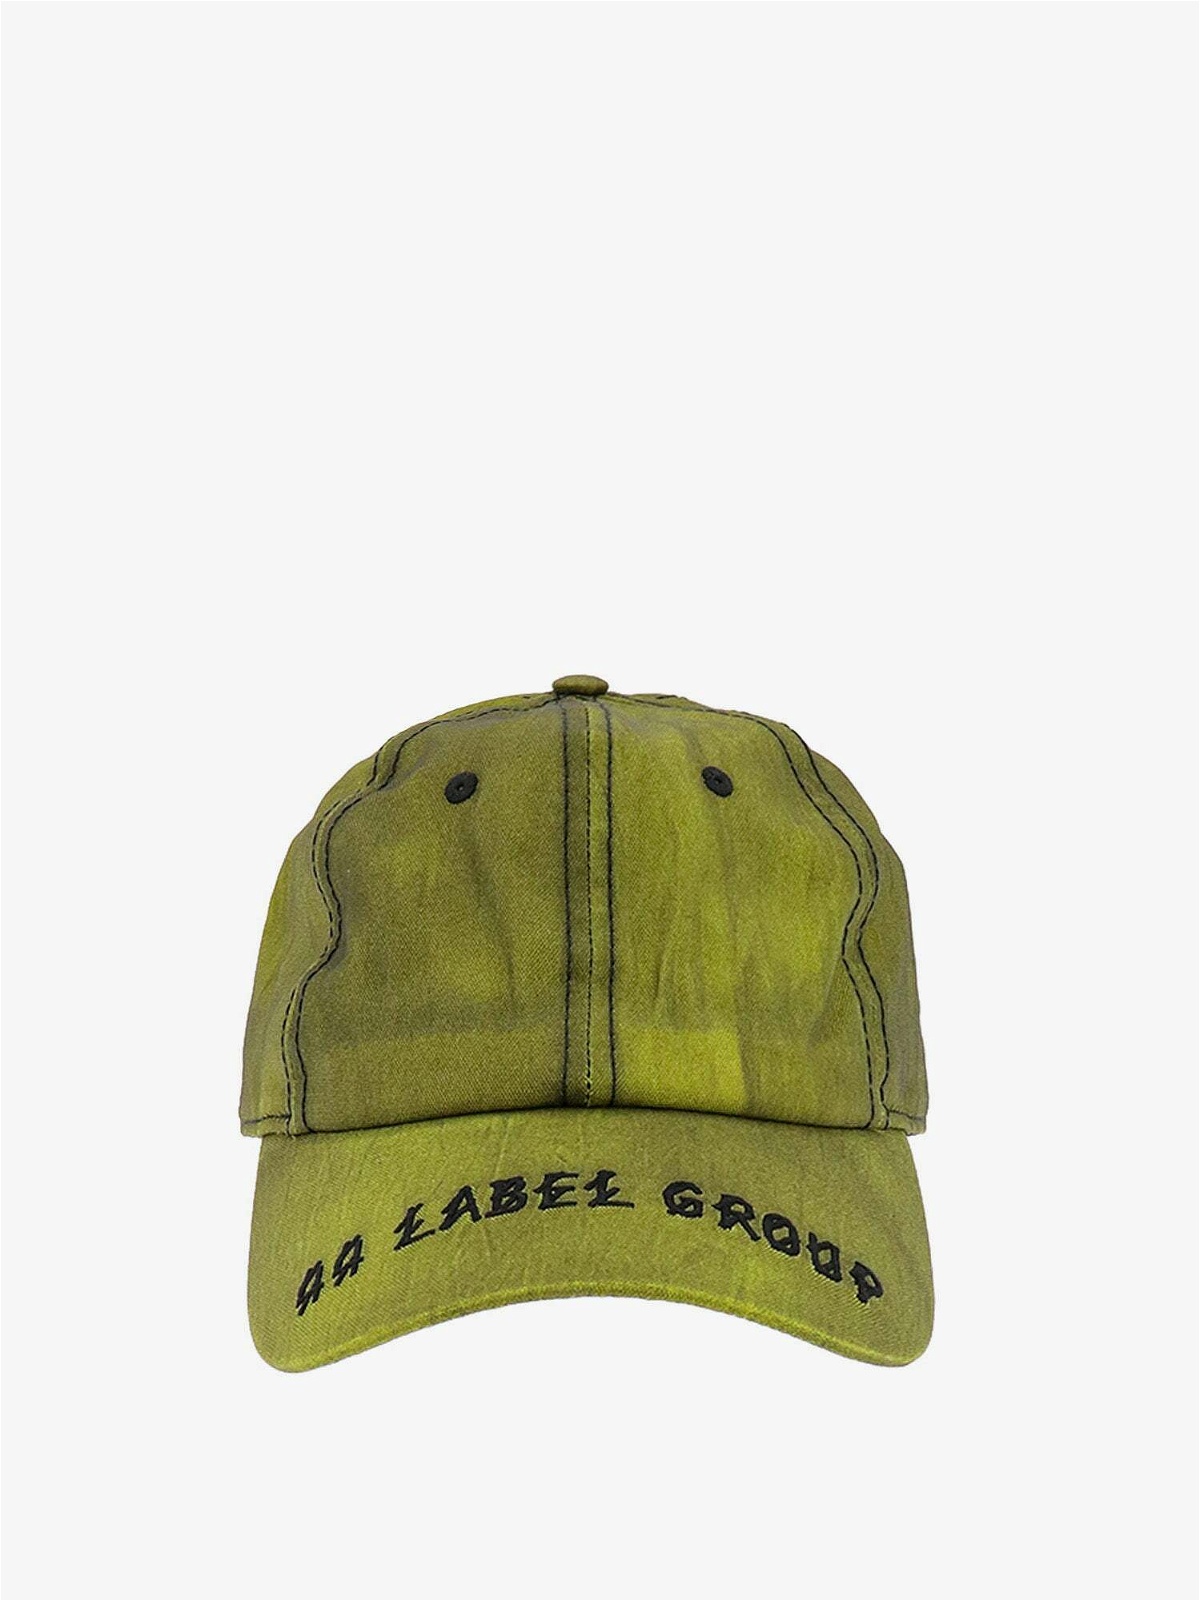 44 Label Group Hat Green   Mens